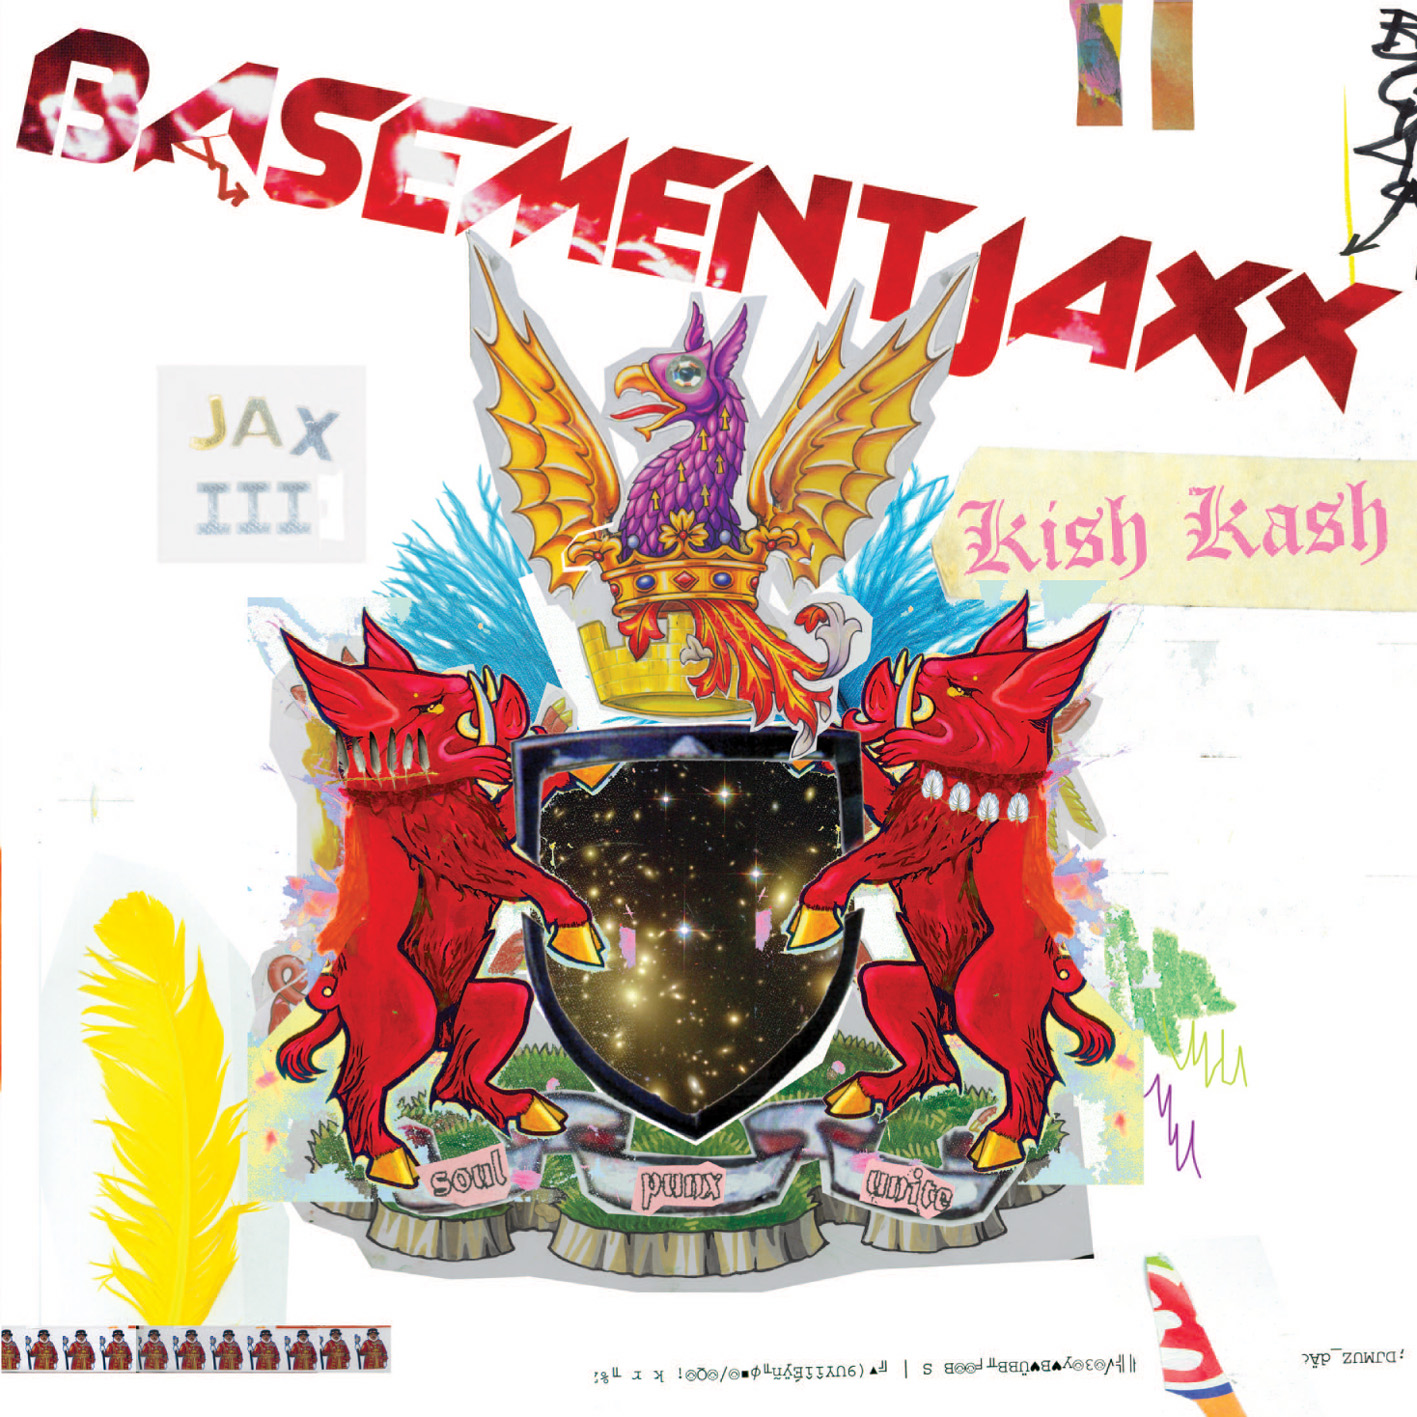 Basement Jaxx - Kish Kash - CD